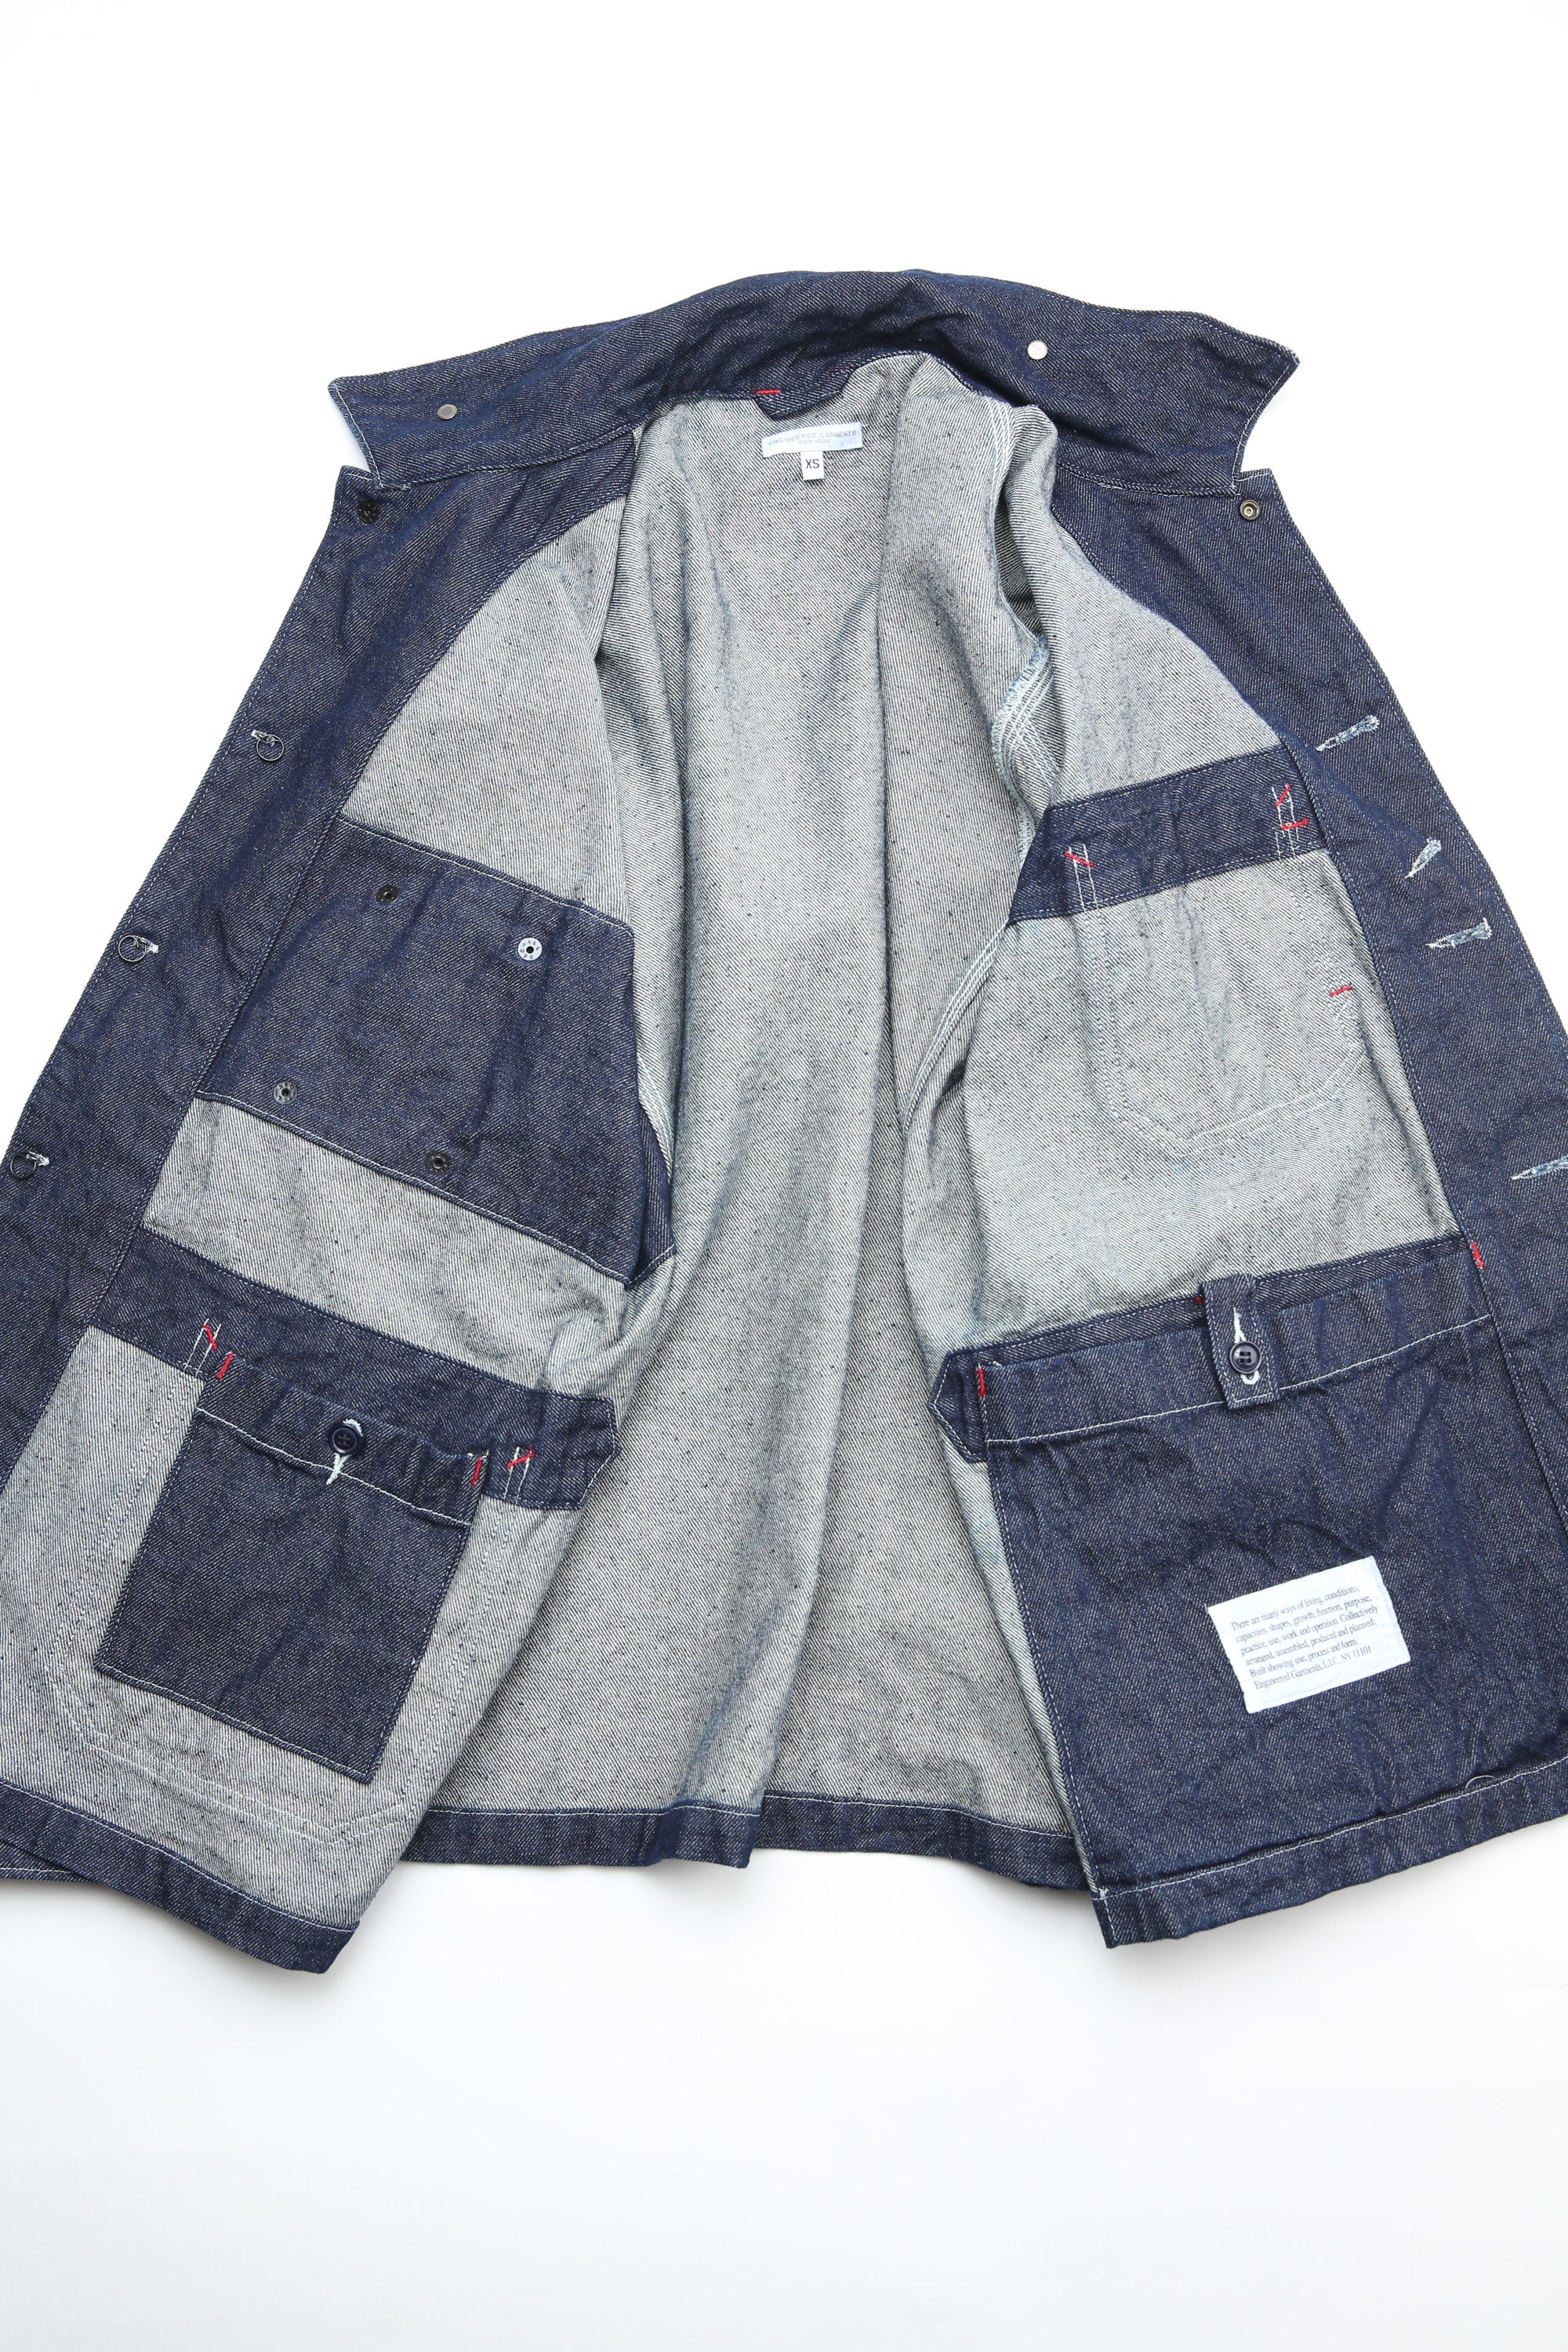 Engineered Garments X Totem FU Over Coverall Jacket - Indigo 12oz Denim